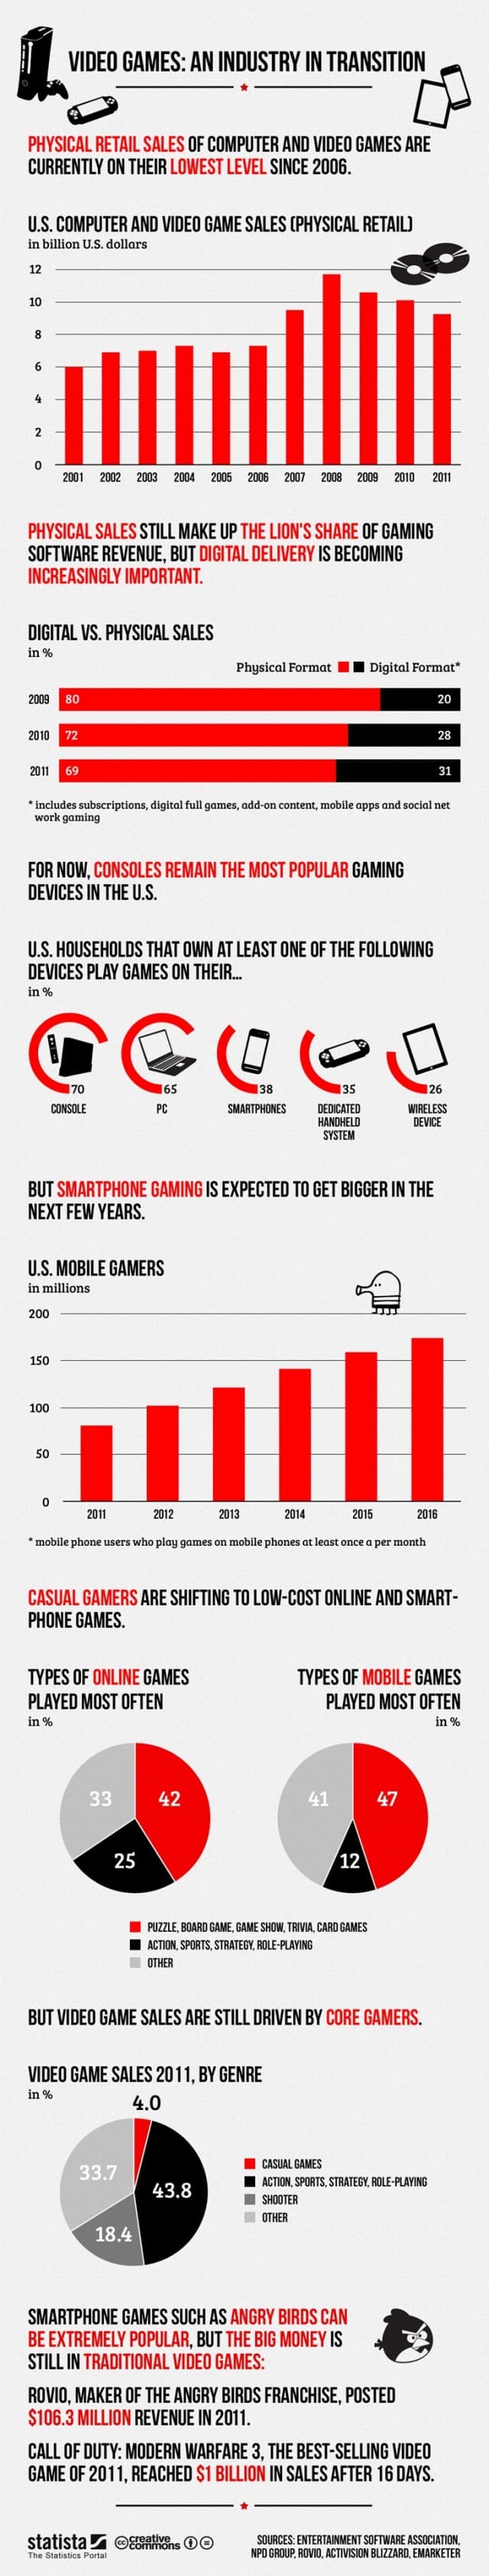 Video Games Digital vs Retail Sales